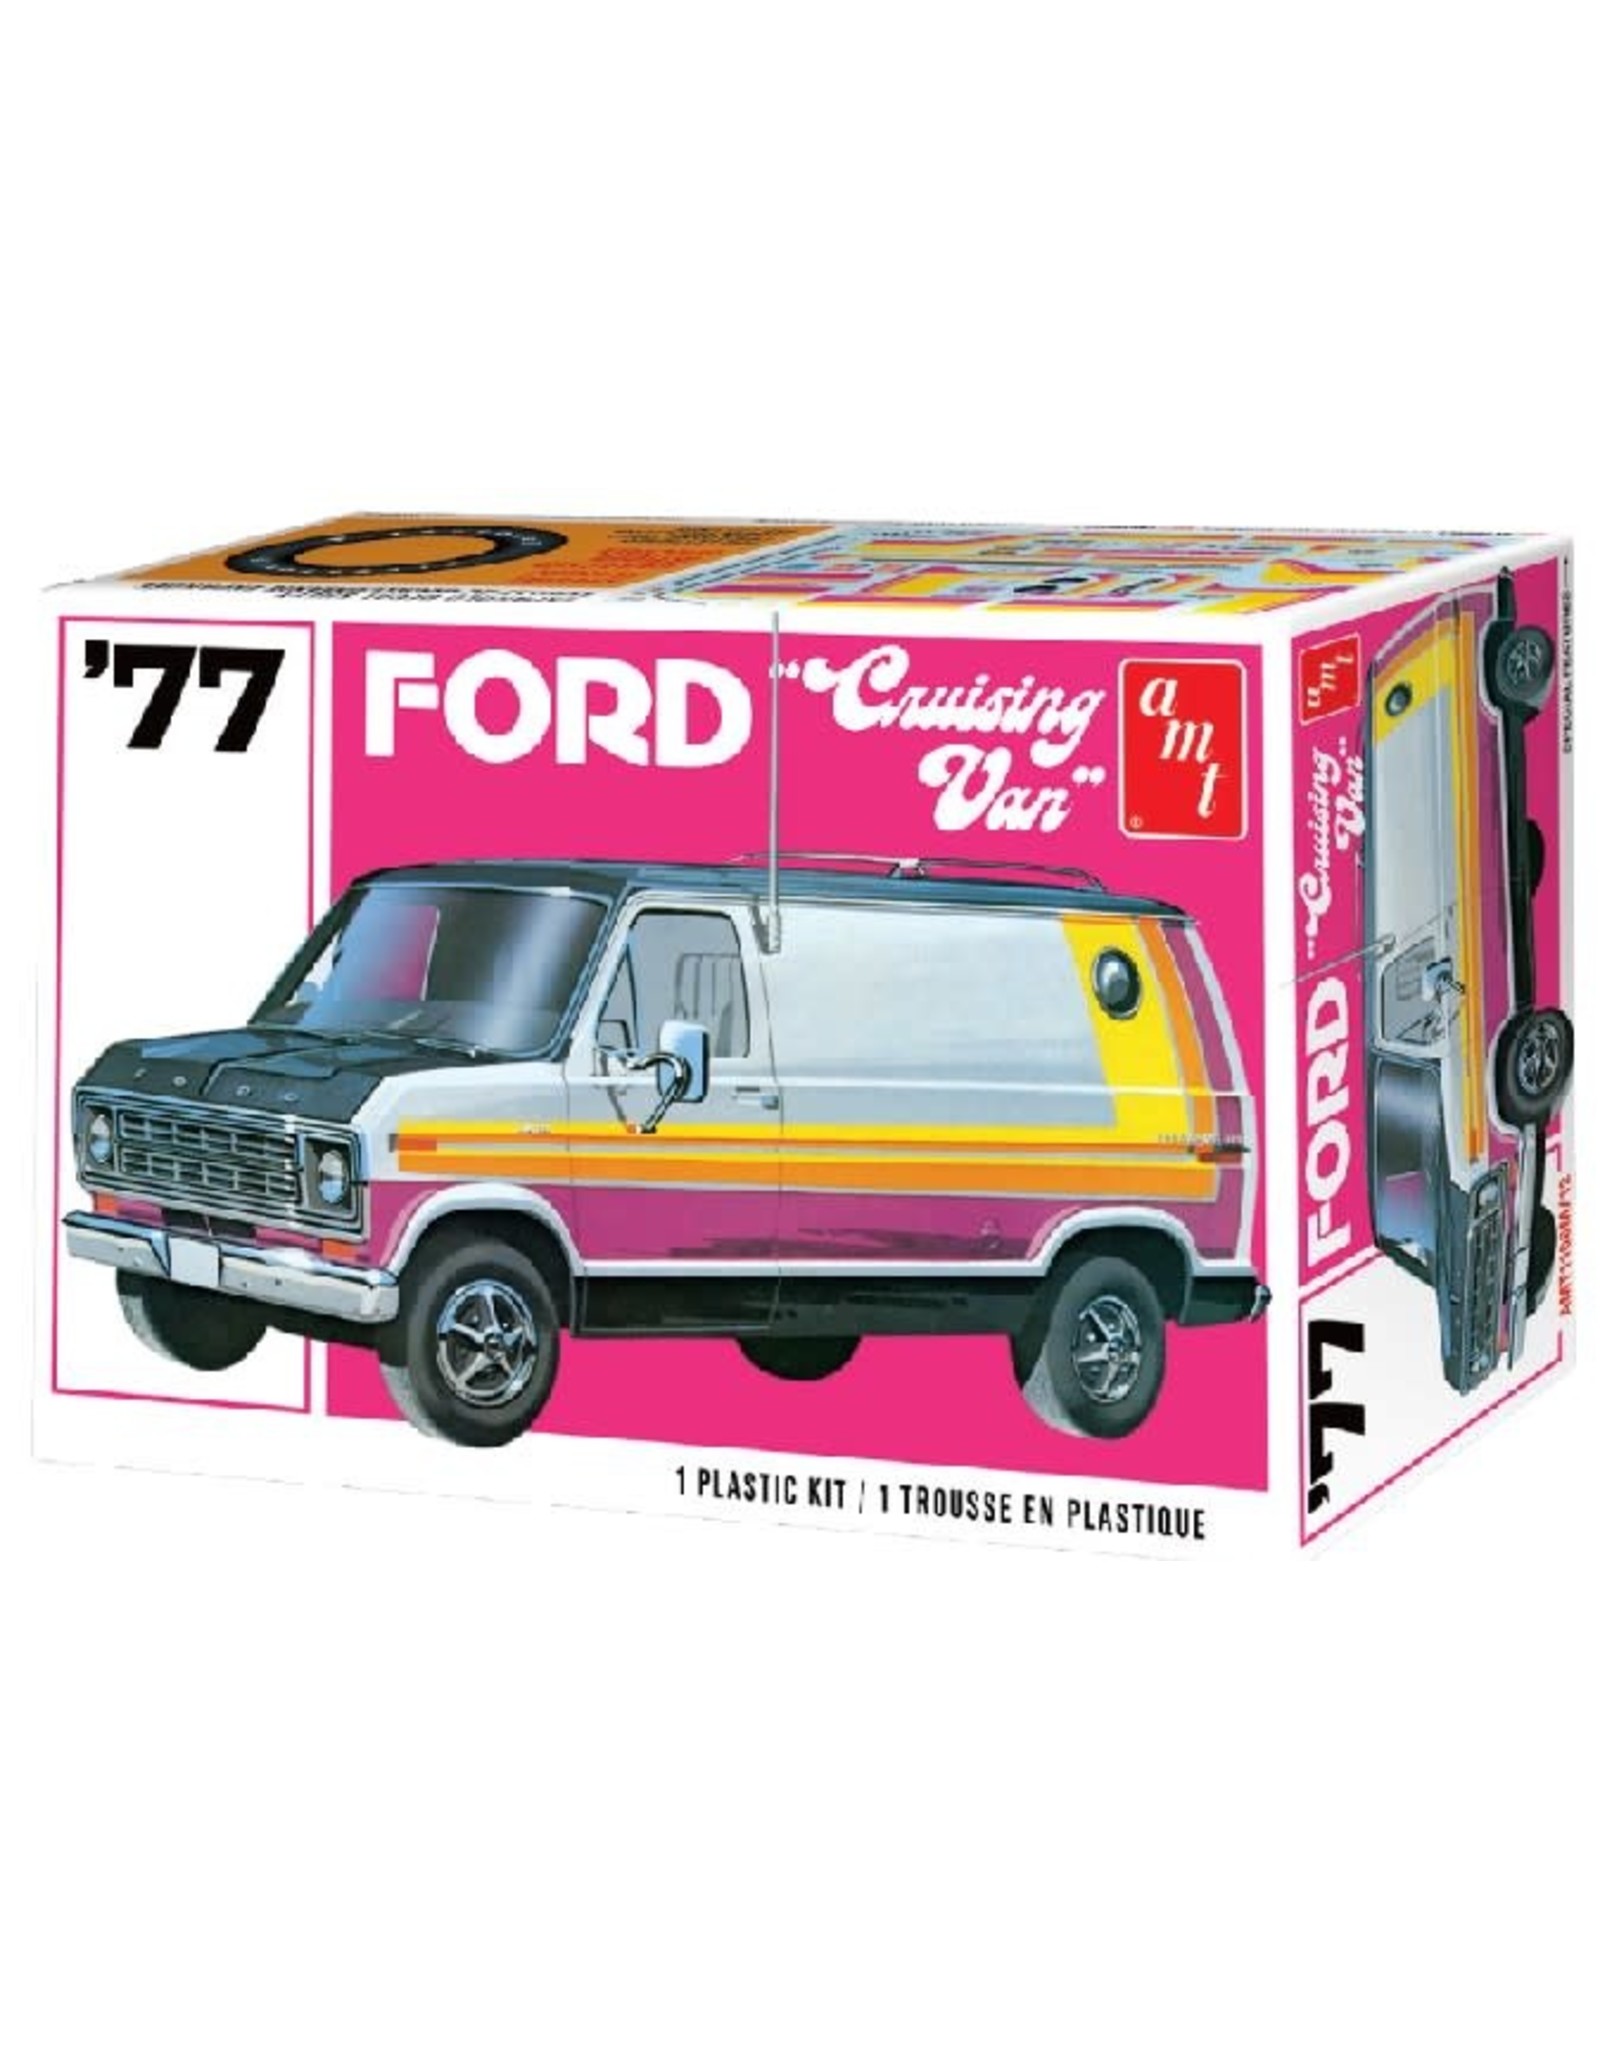 amt '77 Ford cruising van